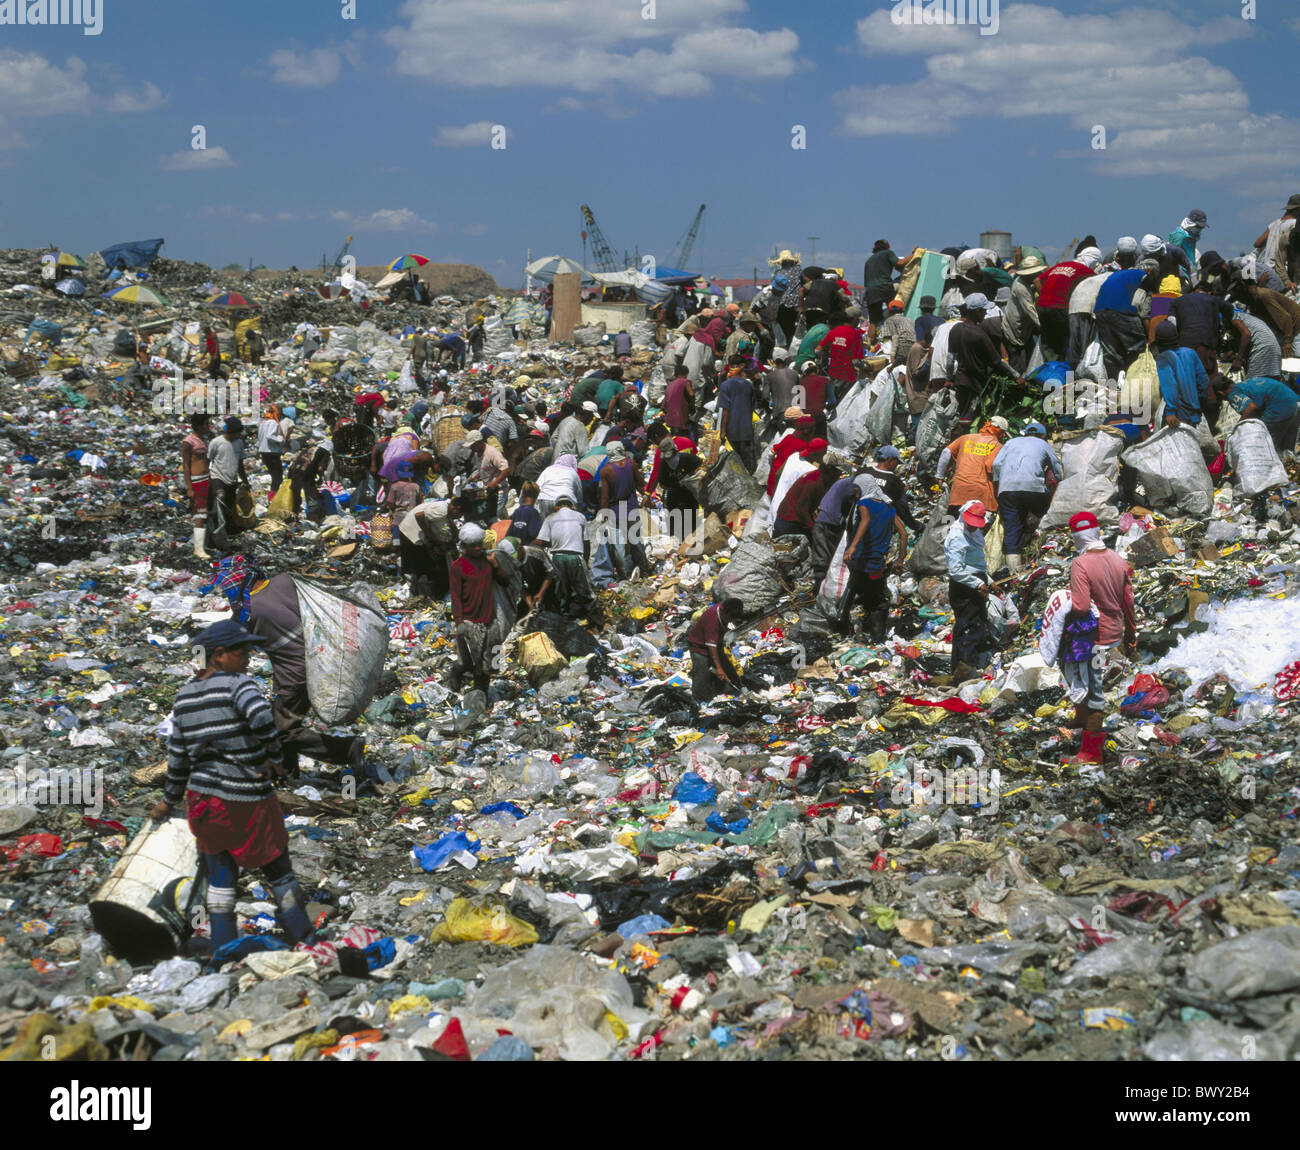 Abfall-Berg Armut Elend Elend Hunger in der Welt der dritten Person Manila Philippinen Asien Smokie Berg s Stockfoto